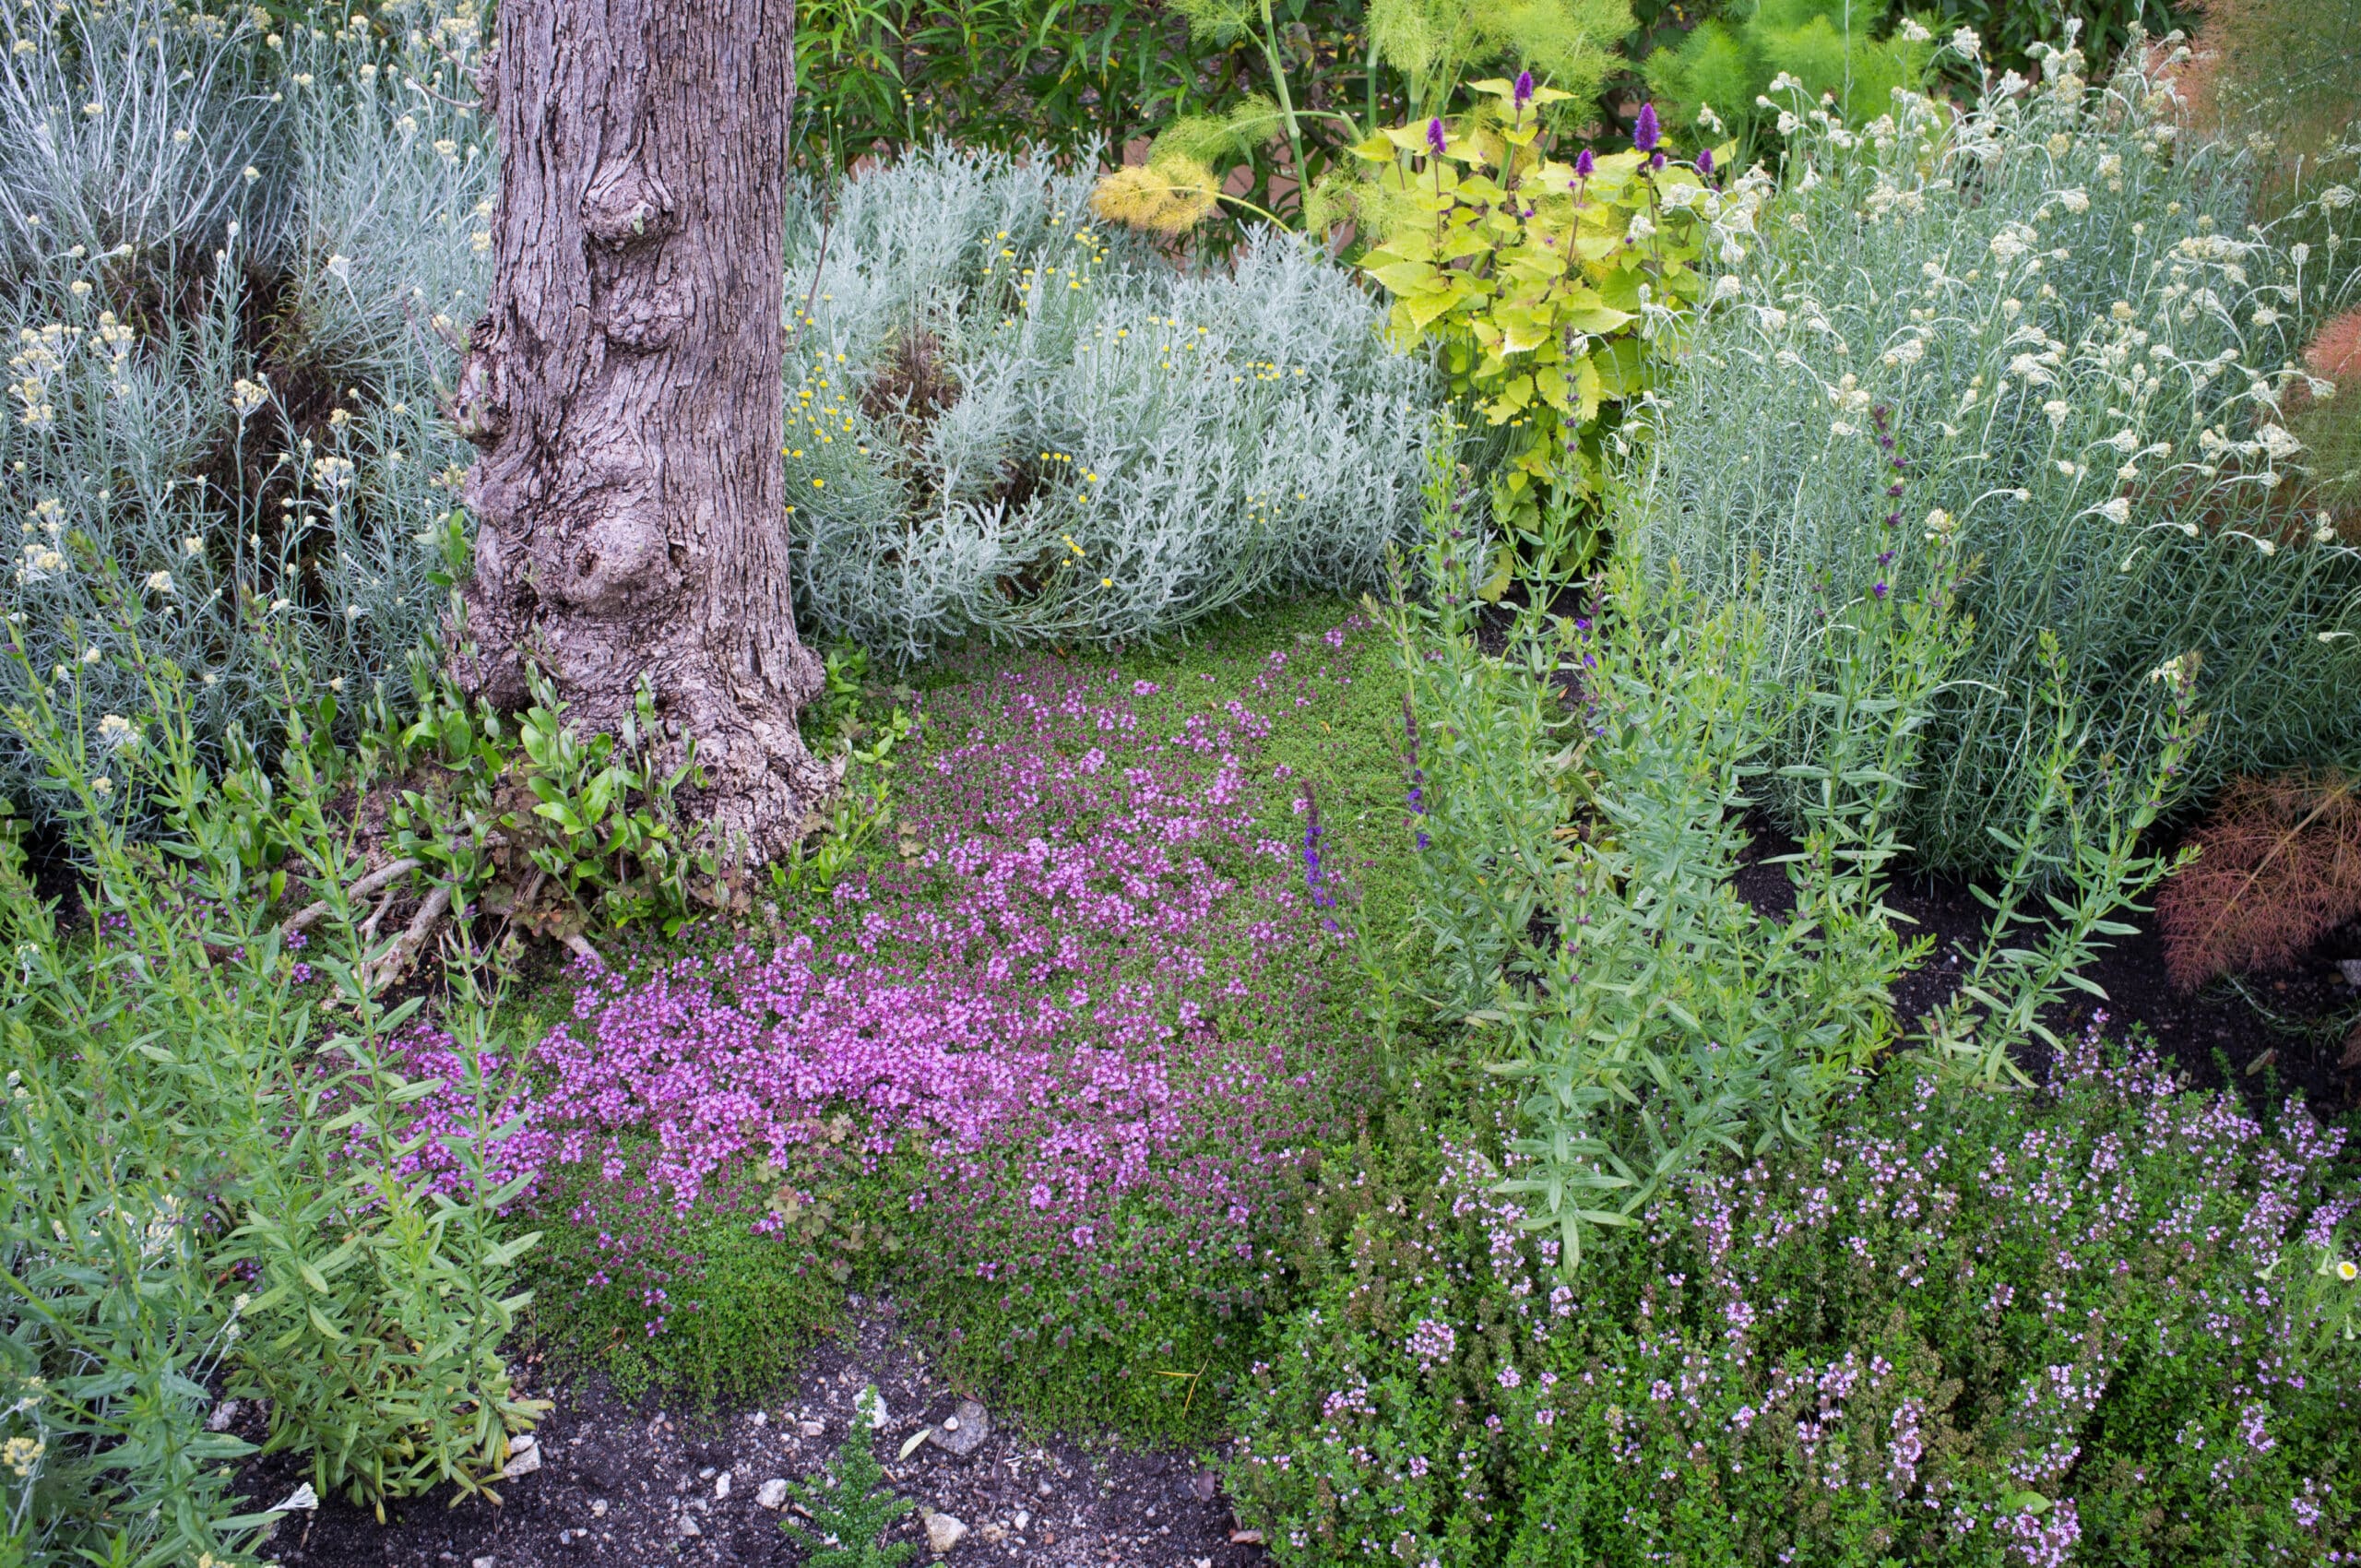 Mixed Herb garden with Thymus